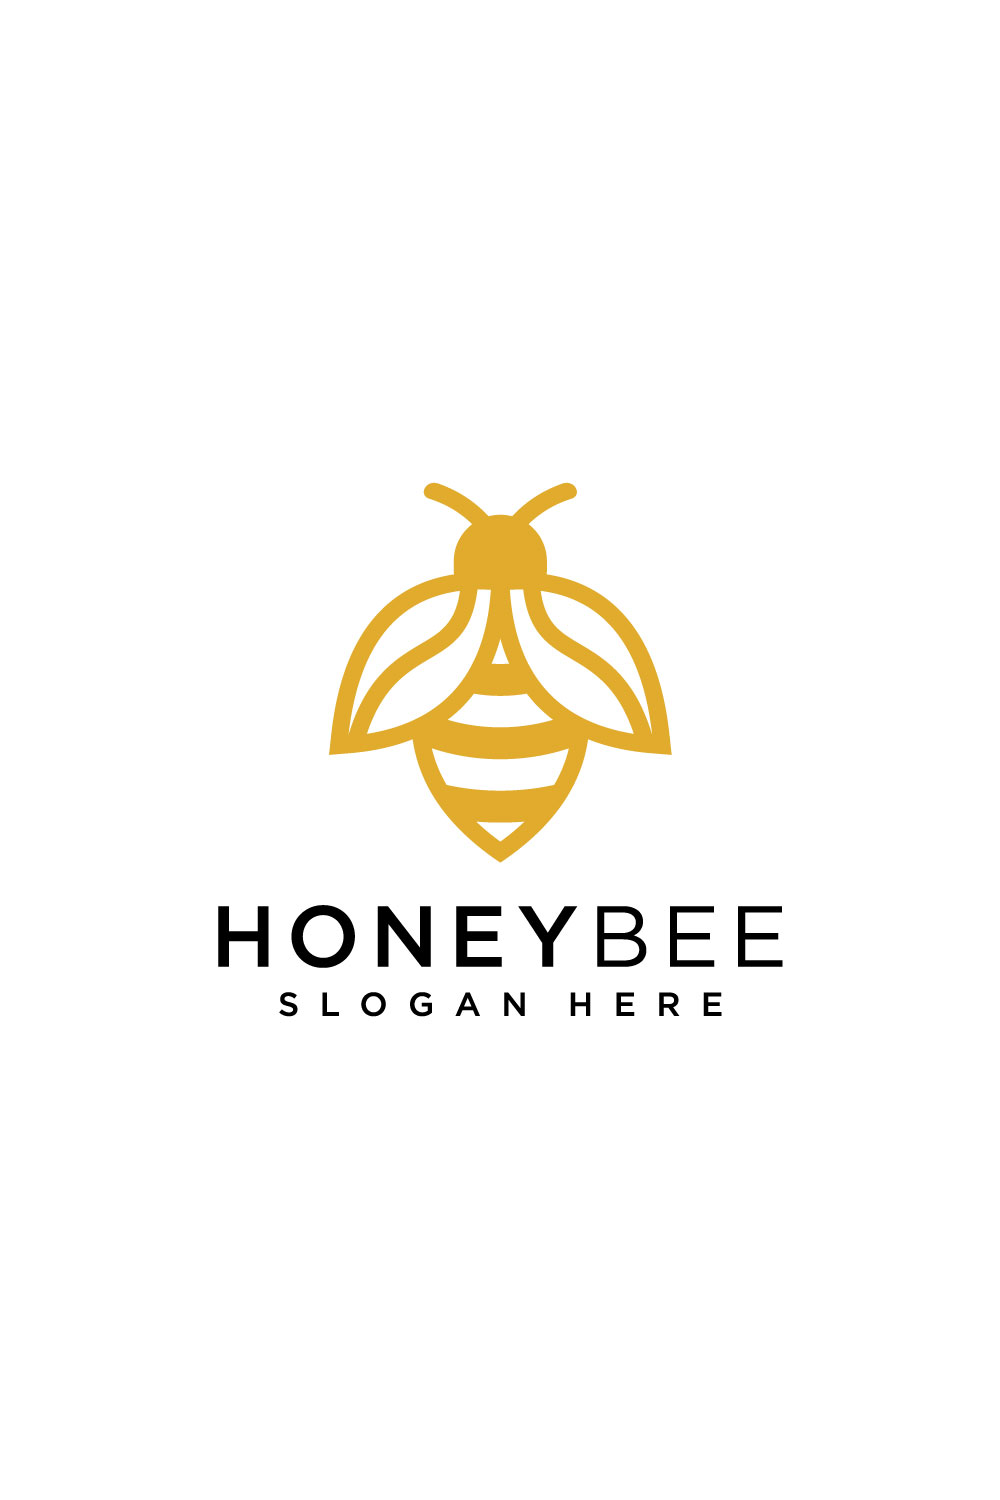 honey bee logo vector design pinterest preview image.